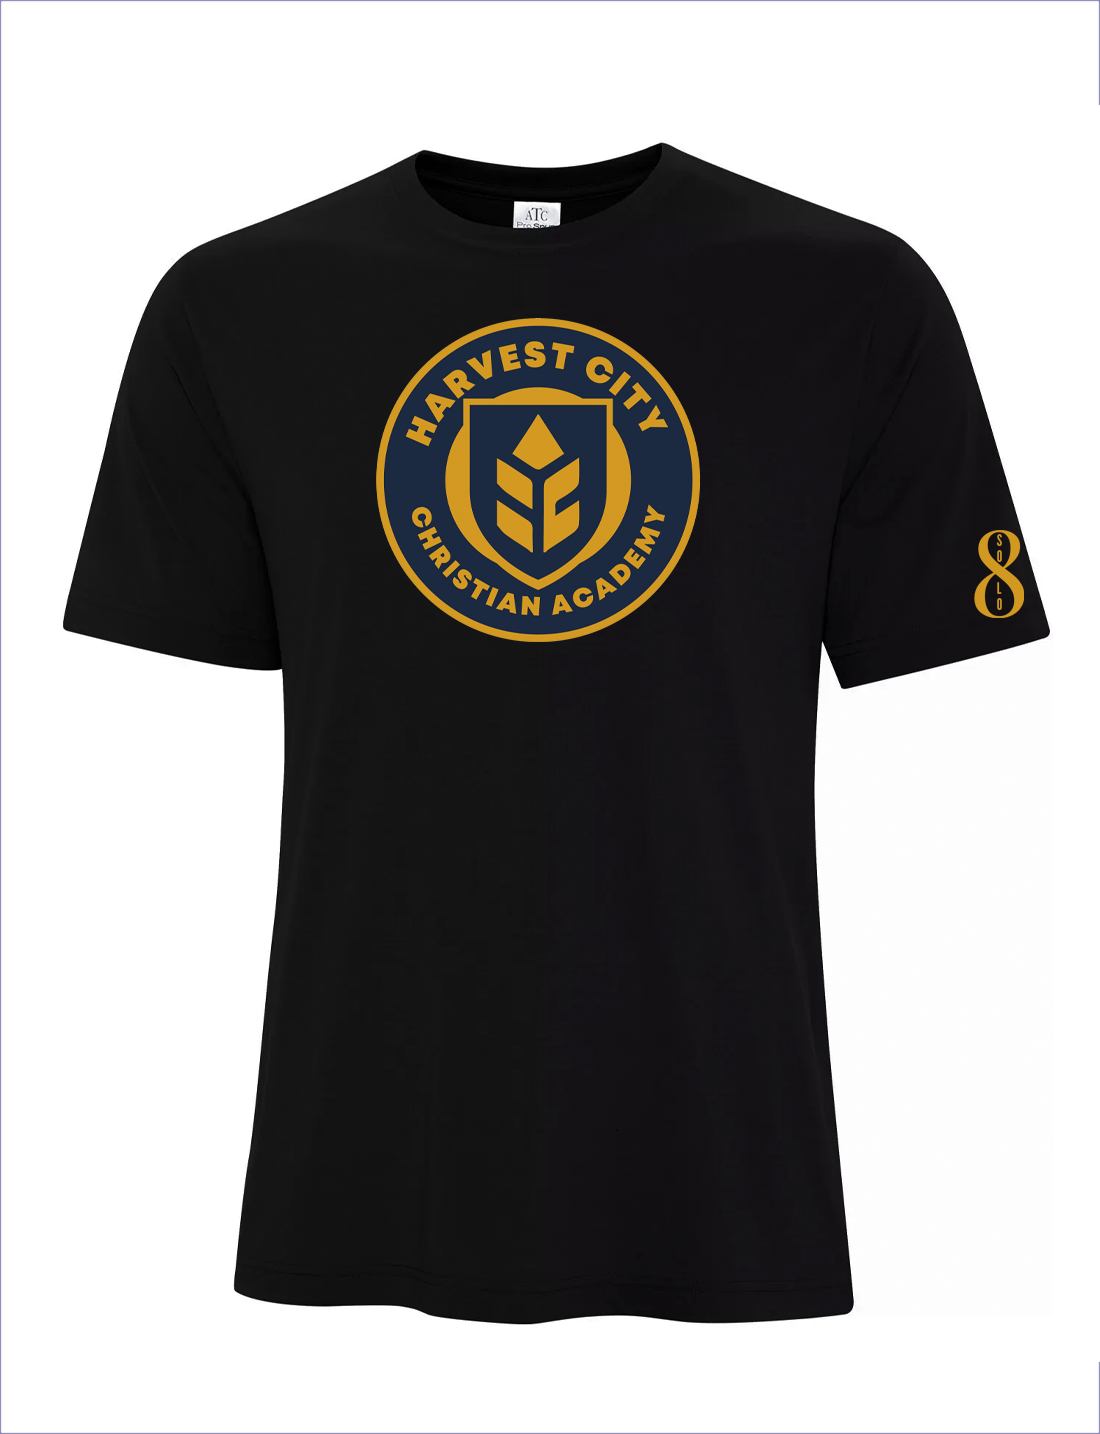 Harvest City Logo T-Shirt